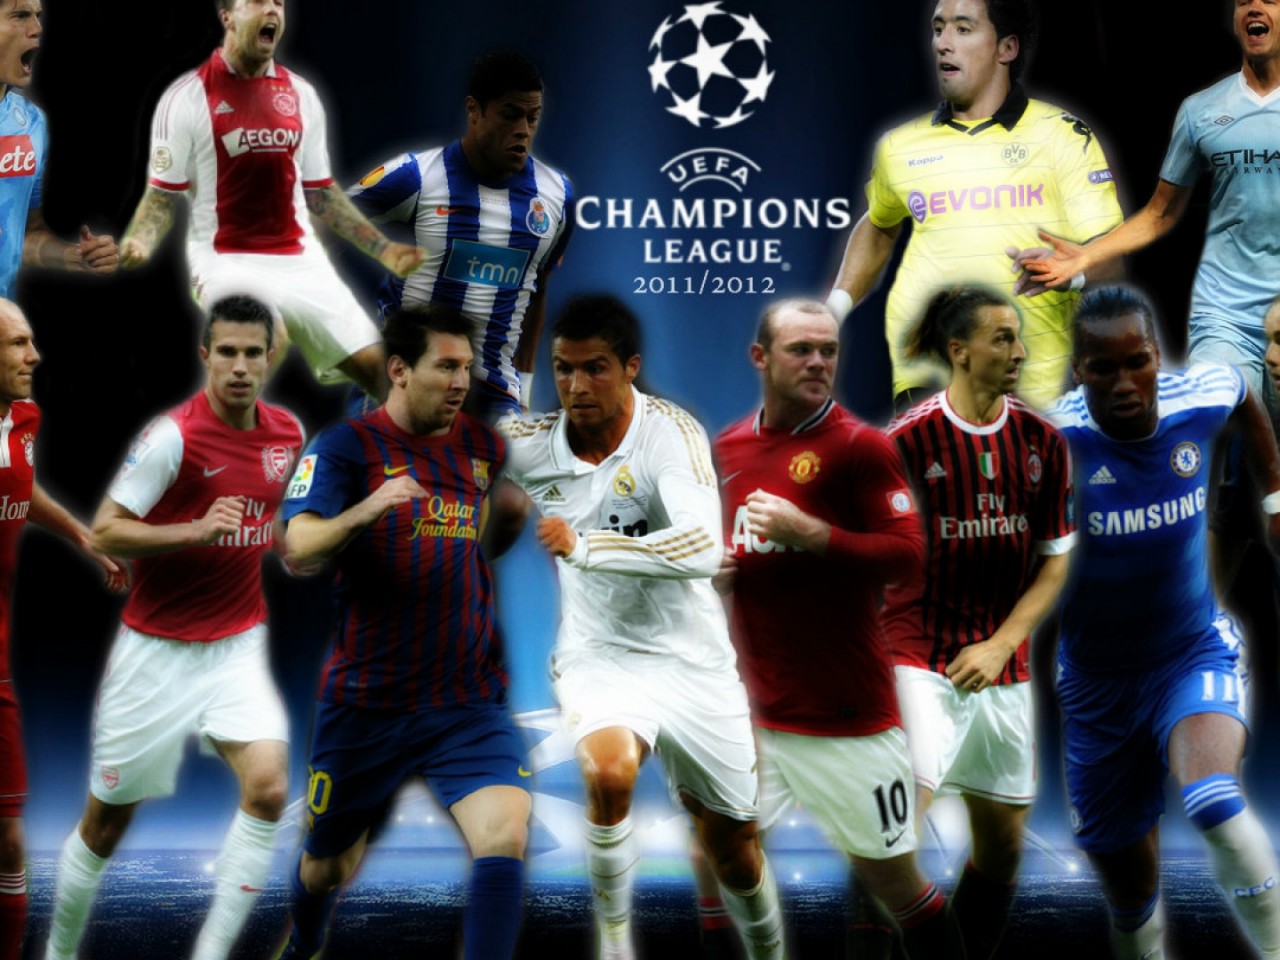 Champions League Wallpaper - High Definition, High Resolution HD Wallpapers  : High Definition, High Resolution HD Wallpapers